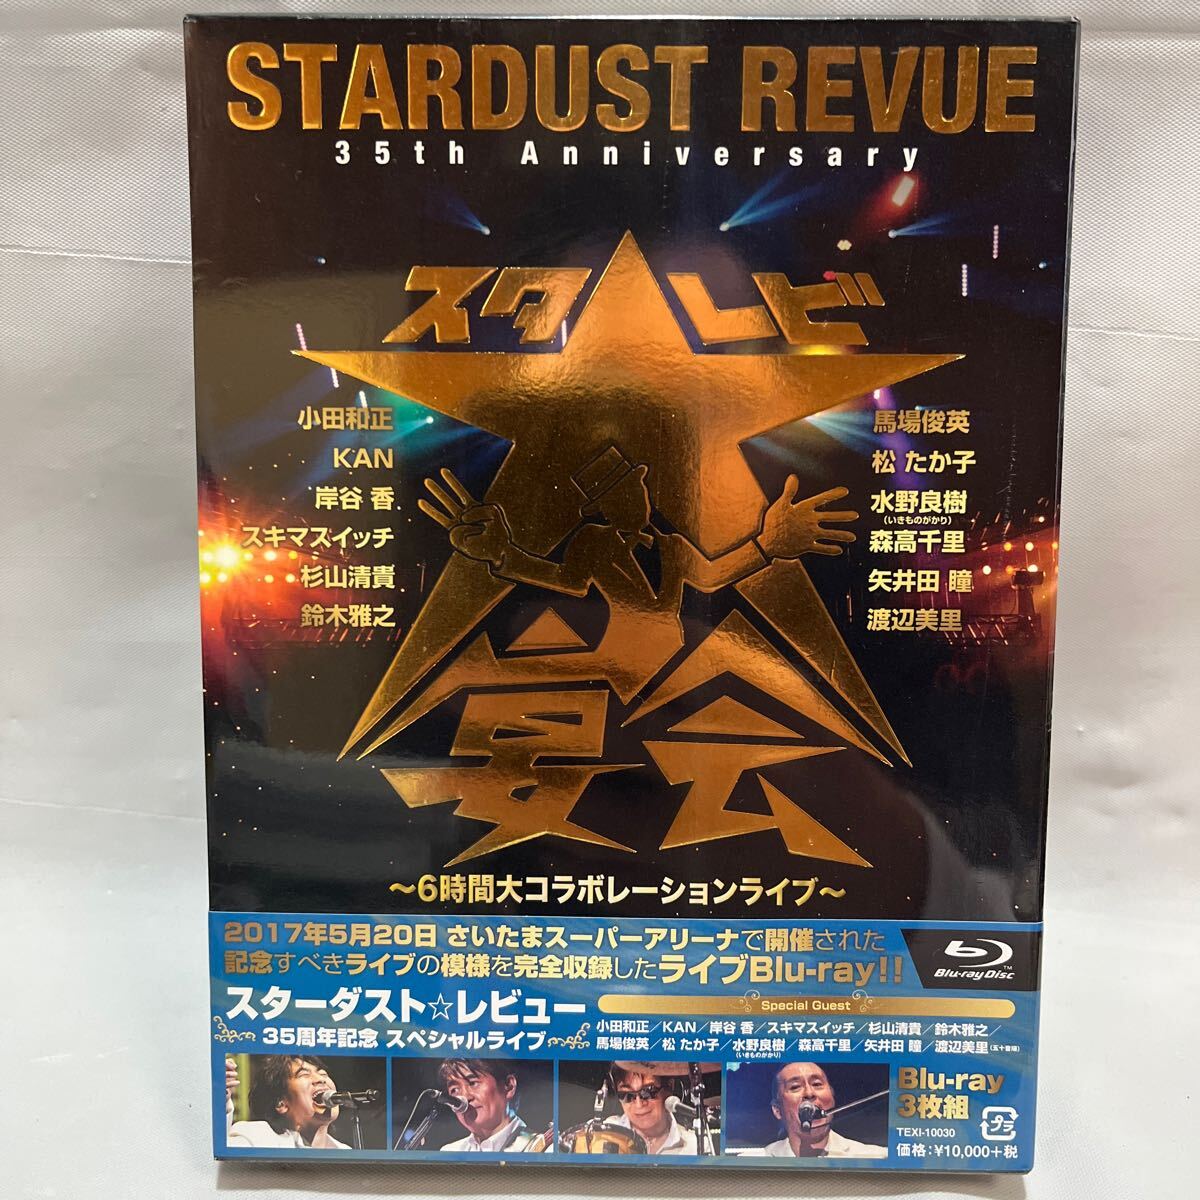  Stardust Revue 35TH ANNIVERSARY старт *rebi большой ..Blu-ray нераспечатанный 